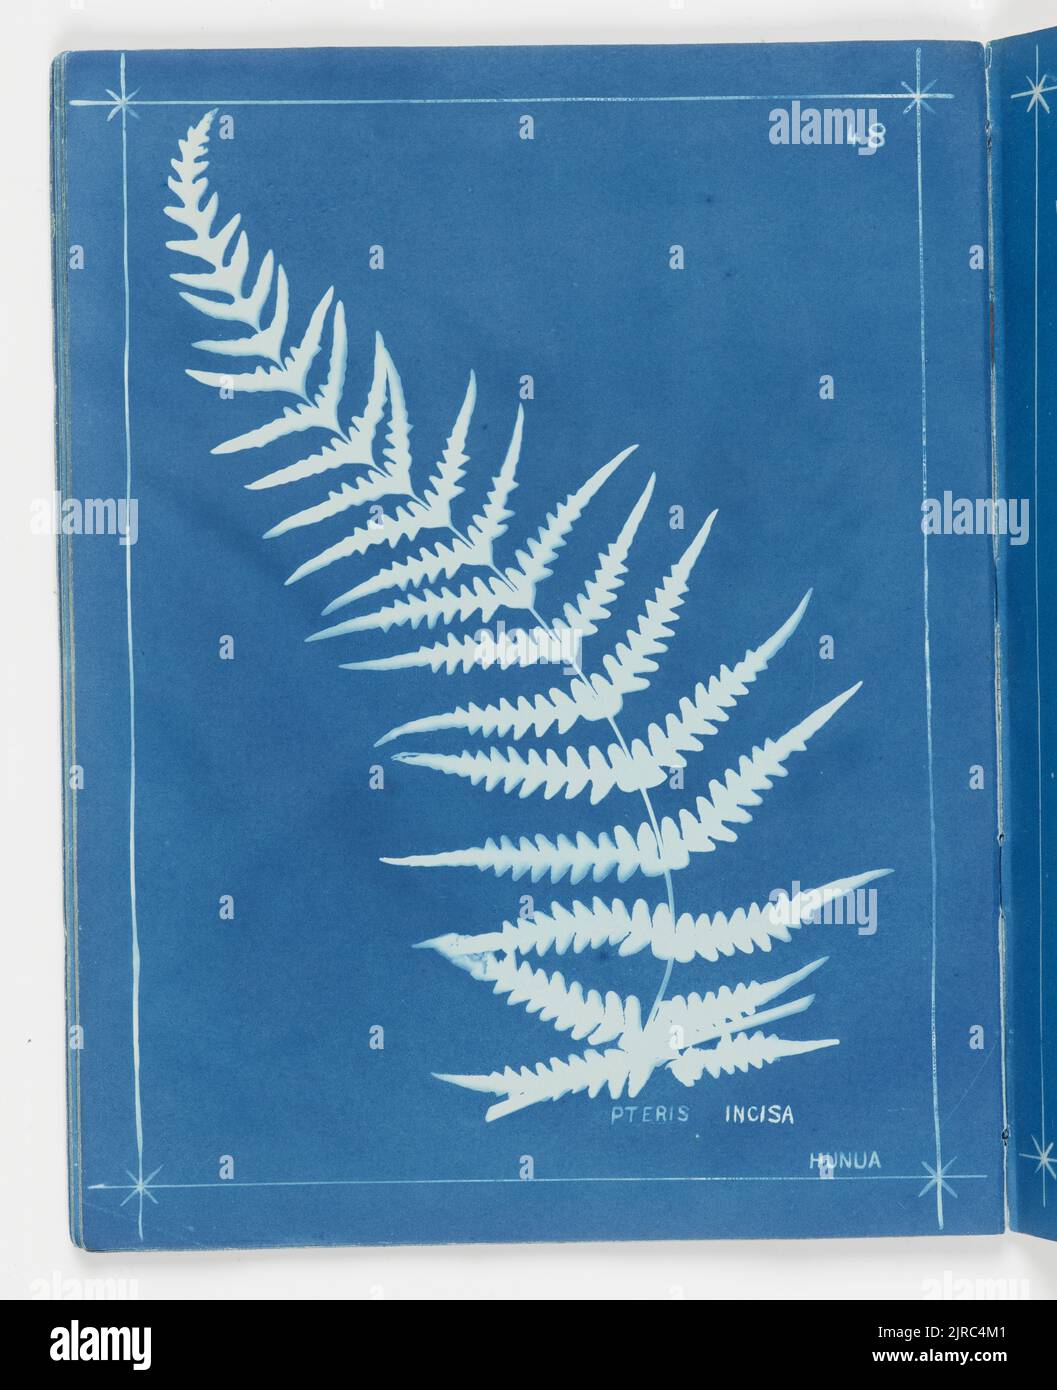 Pteris incisa, Hunua. From the album: New Zealand ferns,148 varieties, 1880, Auckland, by Herbert Dobbie. Stock Photo